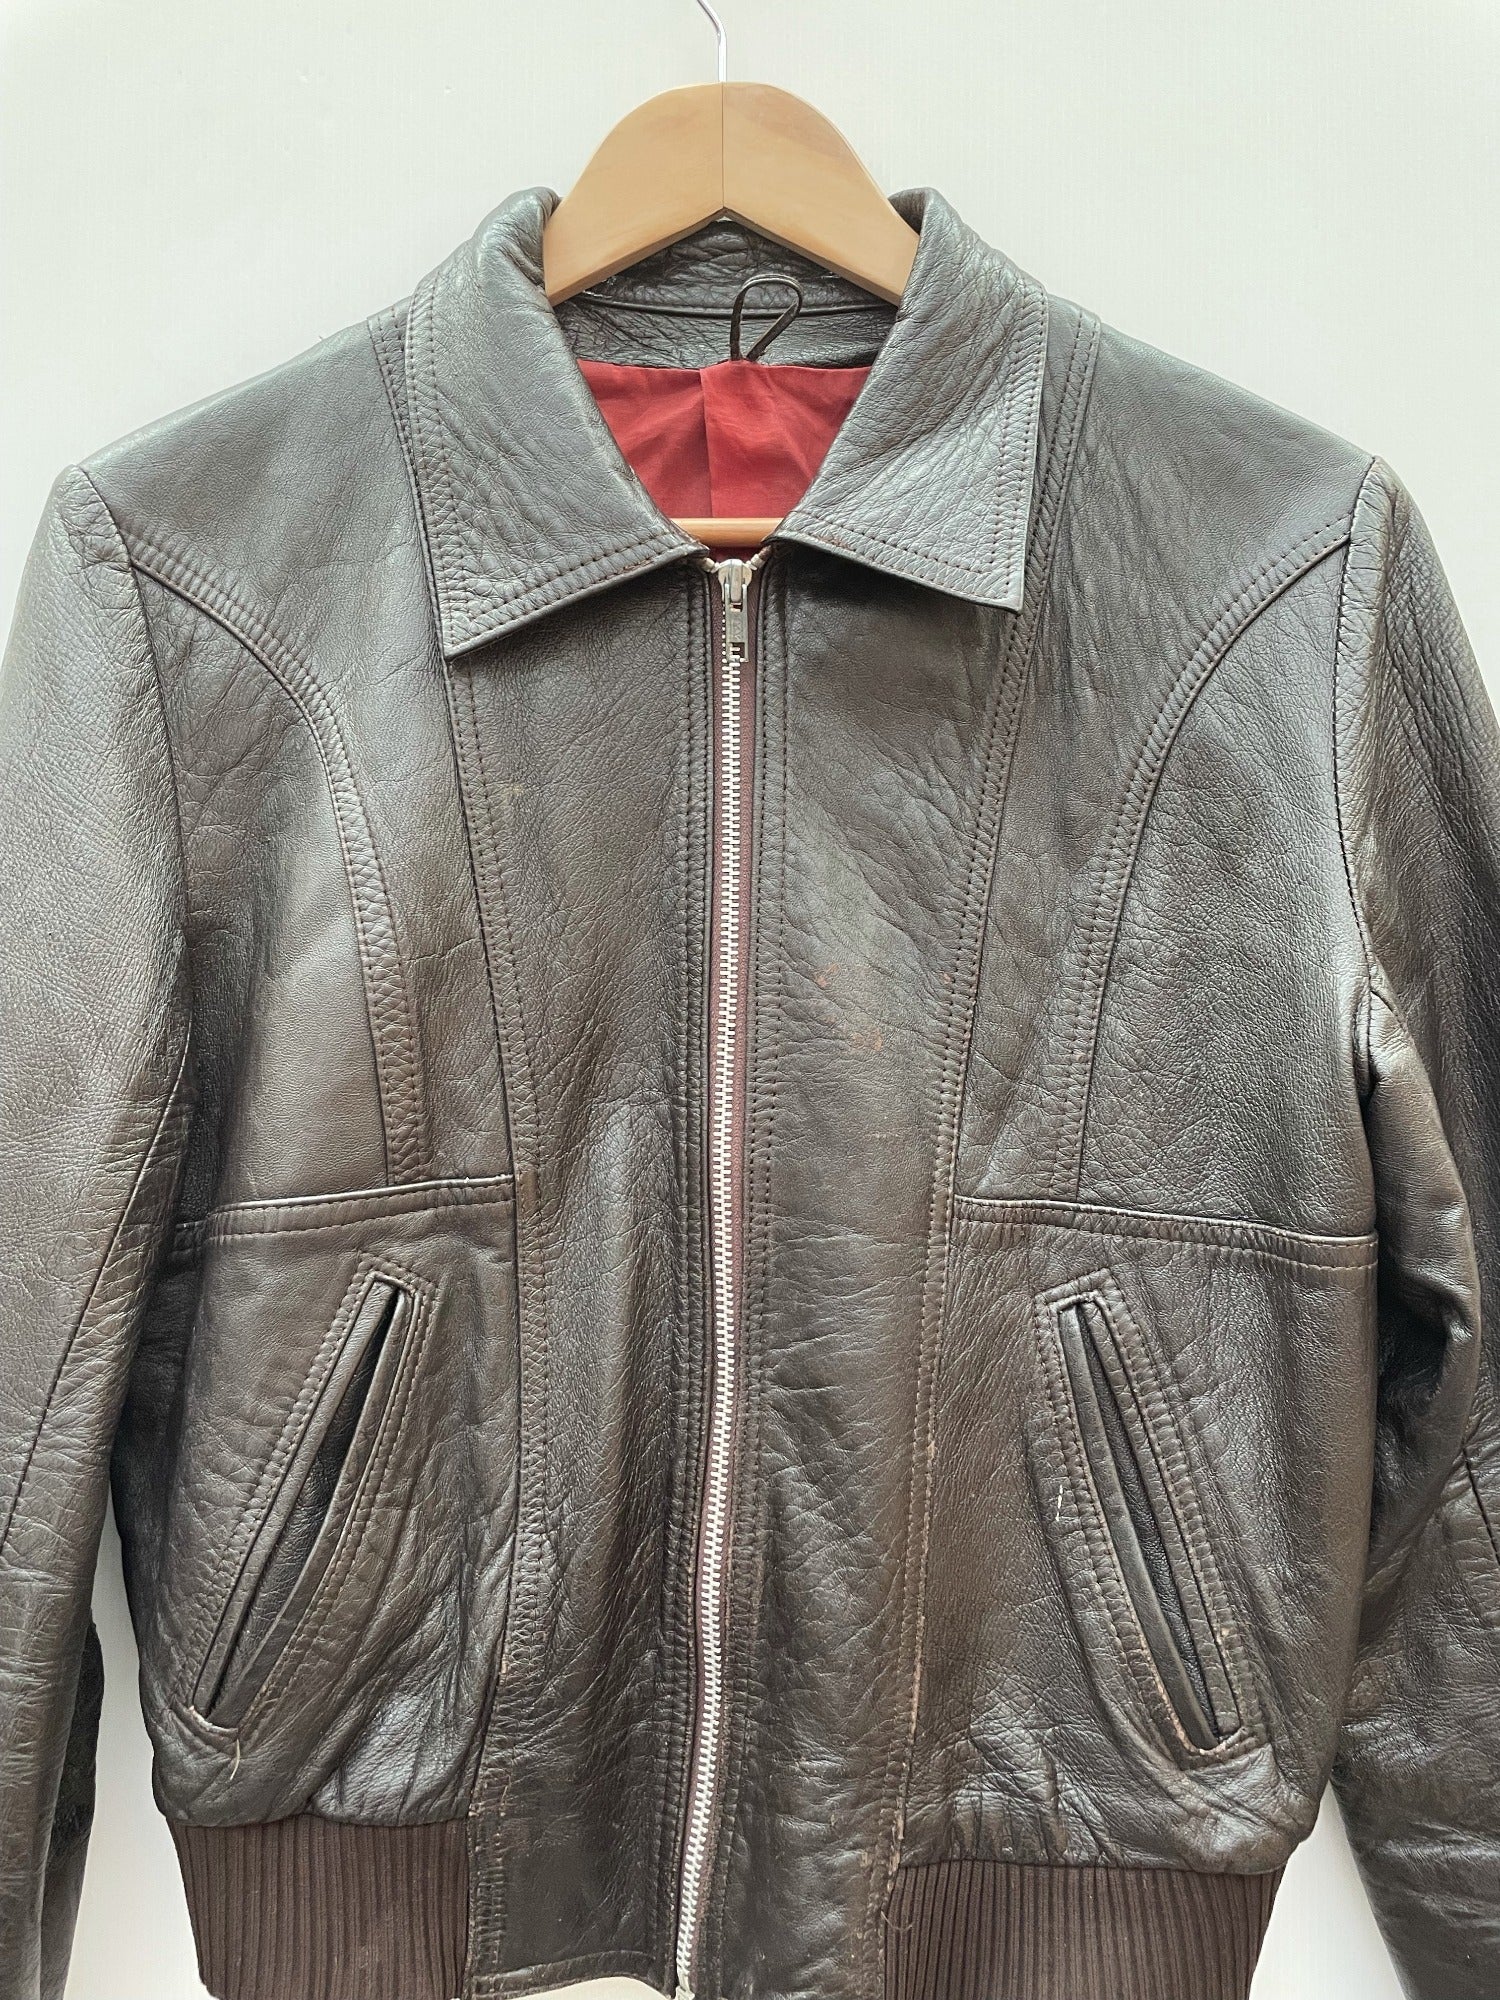 Black Bomber Leather Jacket – Sculpt Leather Jackets